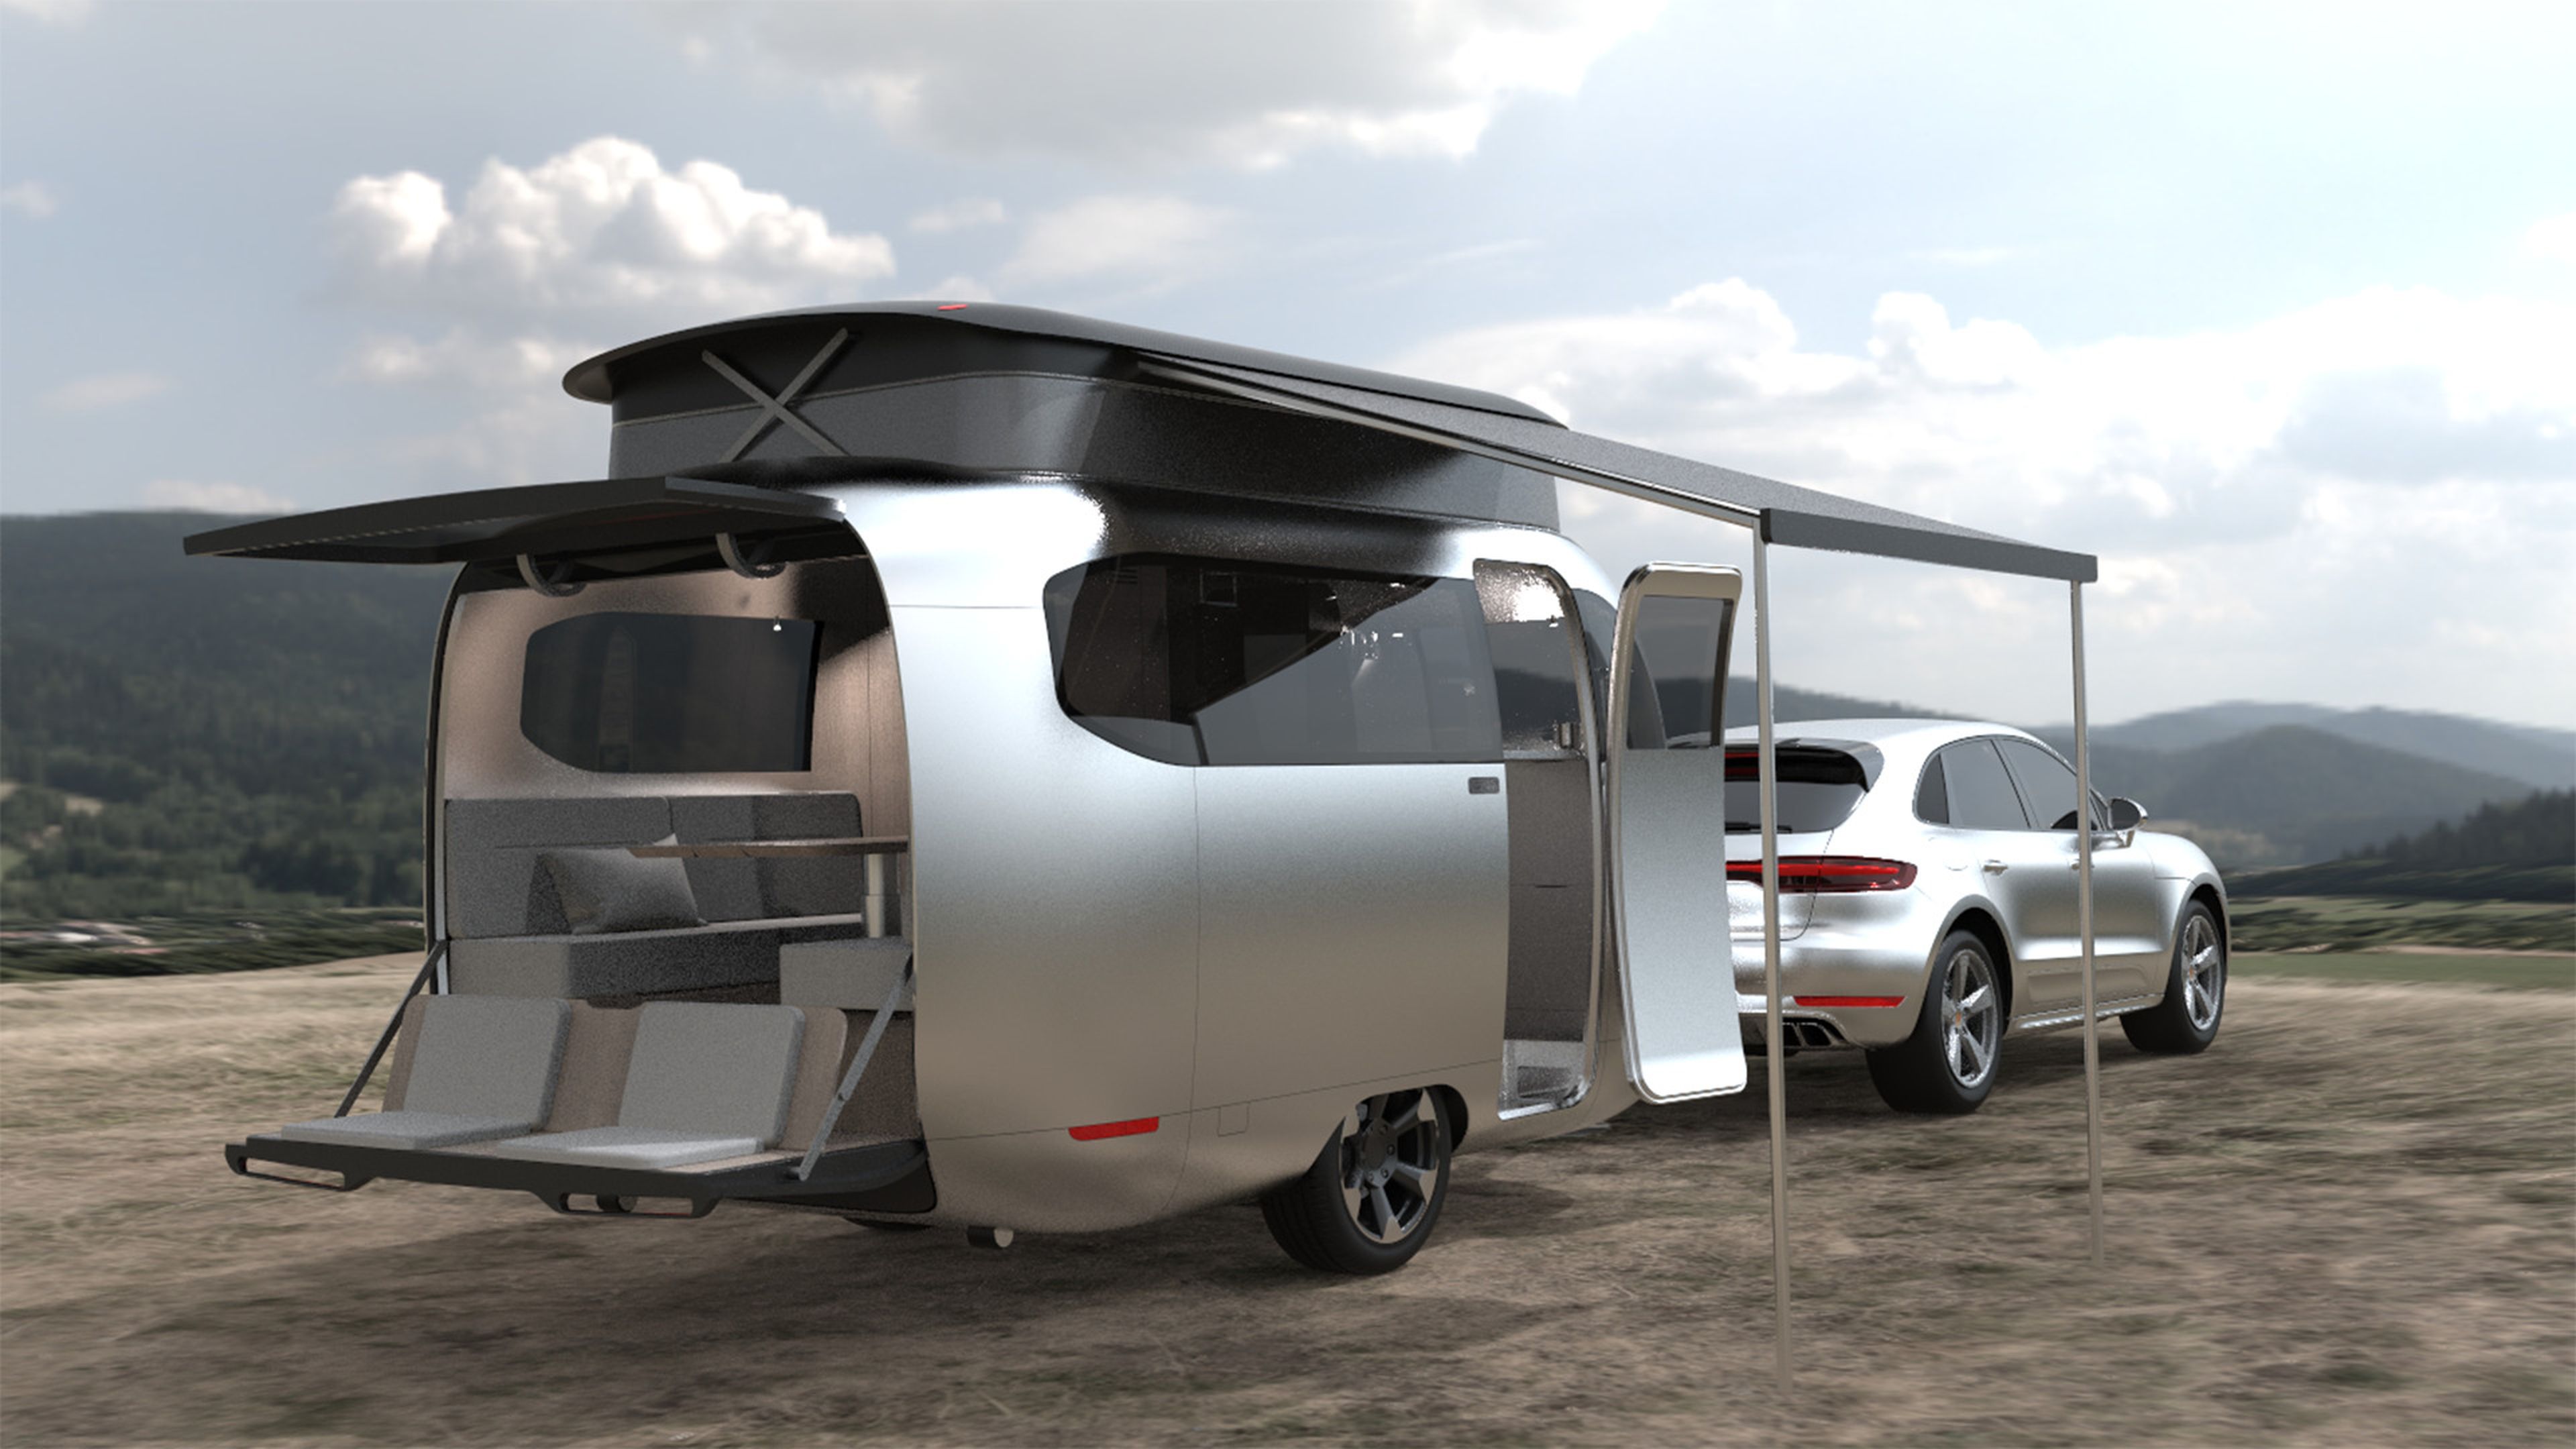 Caravana Airstream Studio F.A. Porsche Concept Travel Trailer